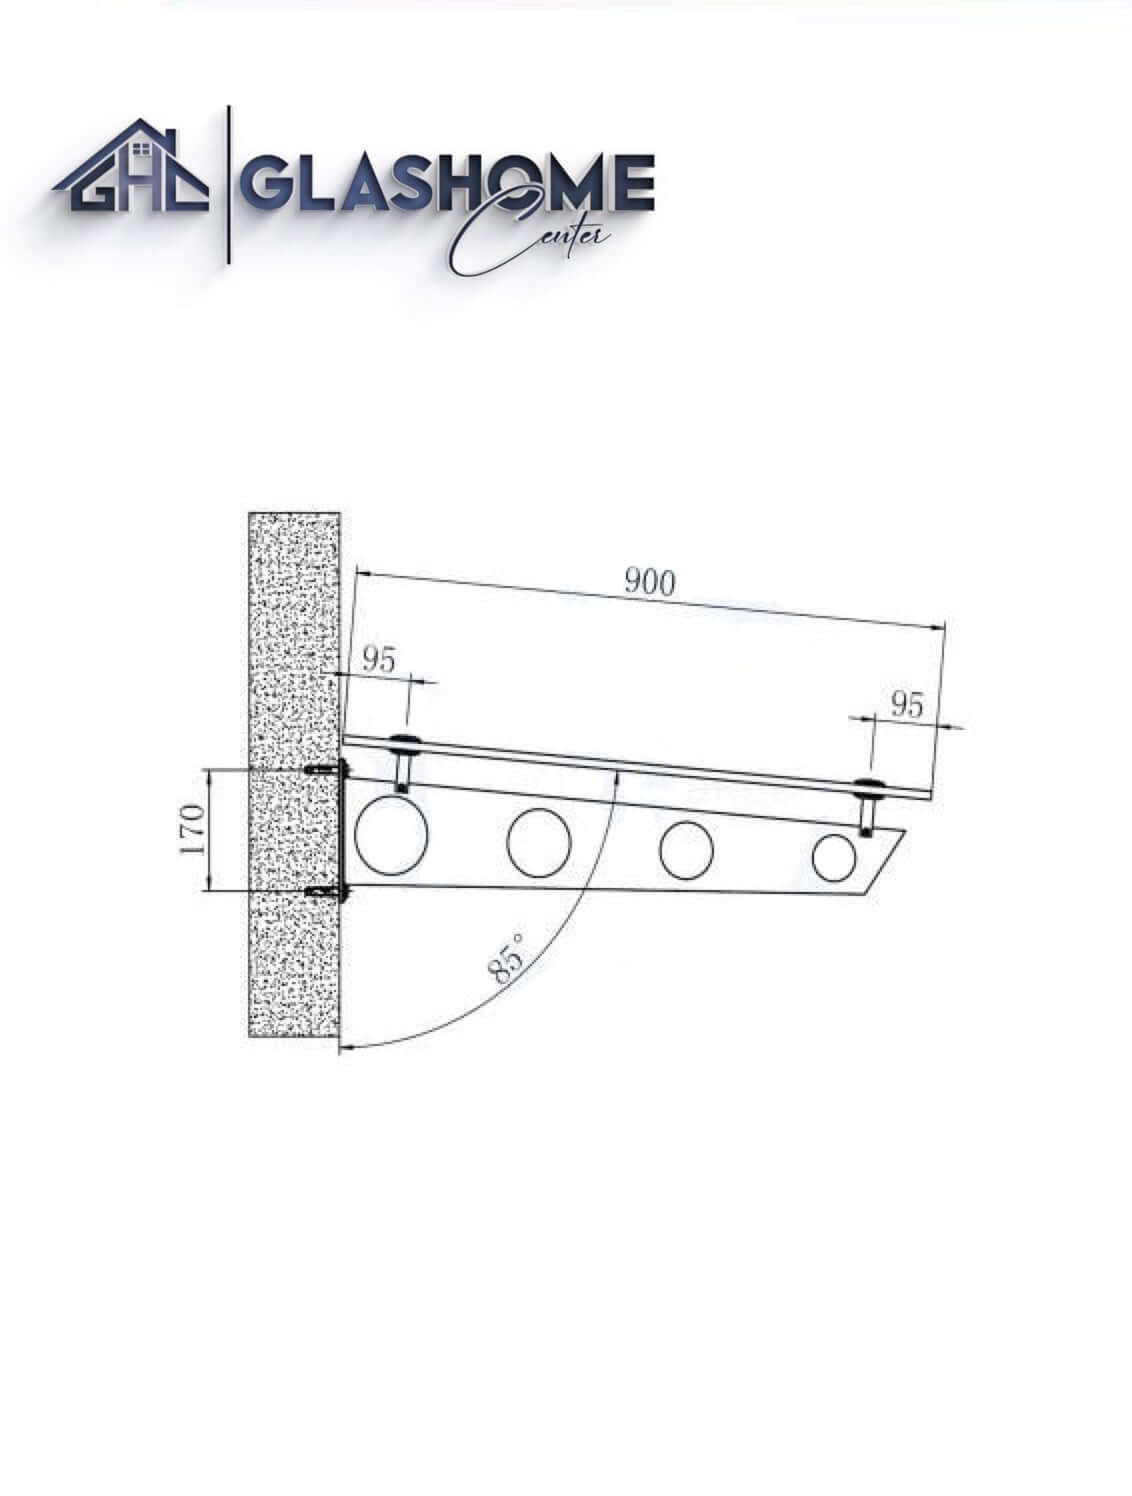 GlasHomeCenter - glass canopy - Clear glass - 140x90cm - 13.1mm VSG - incl. 2 Edelstahlhalterungen Variant "Stockholm"